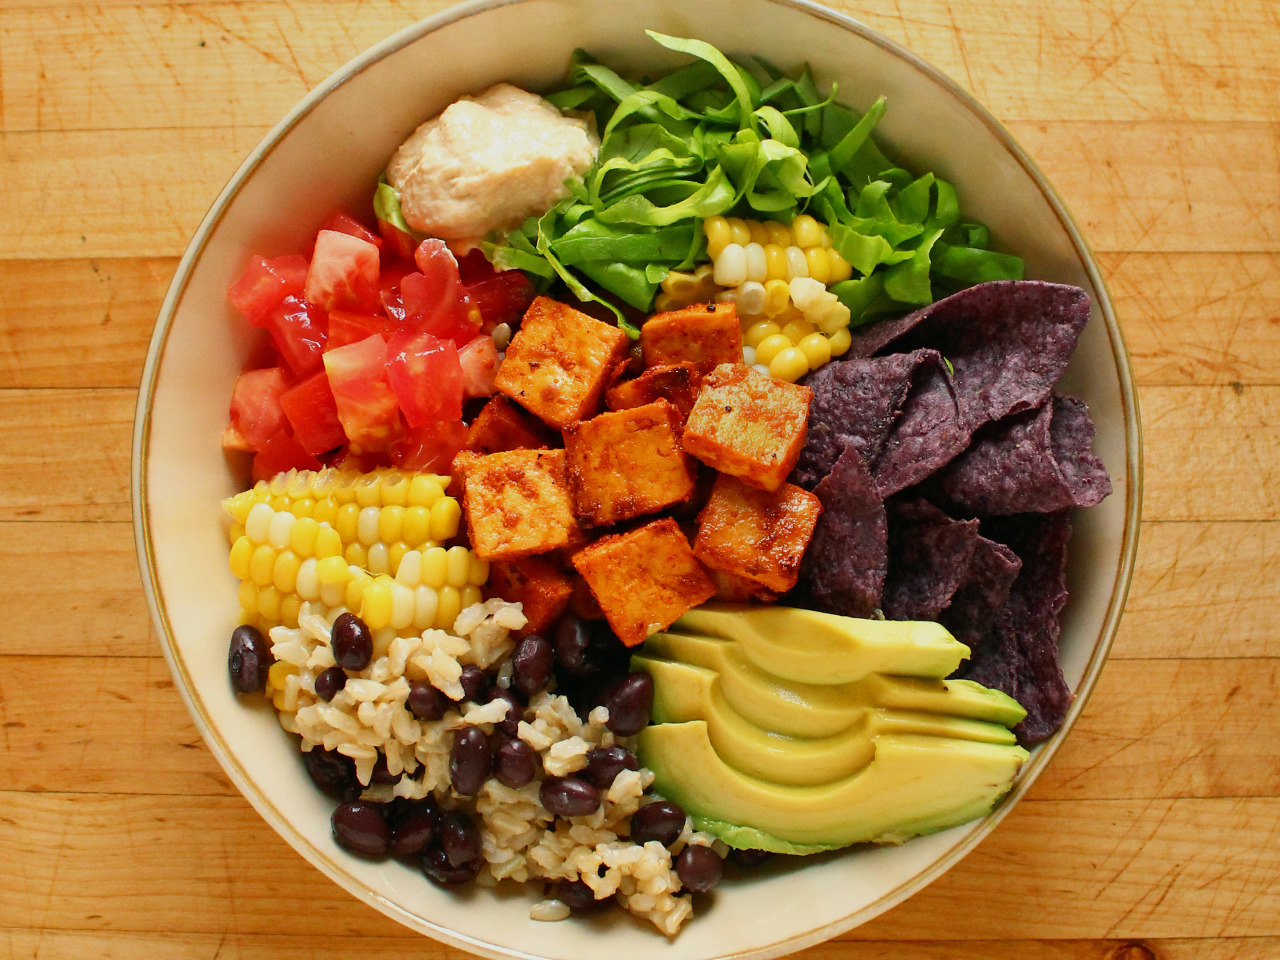 garden-of-vegan:  Vegan taco bowl: brown rice cooked in vegetable stock mixed with